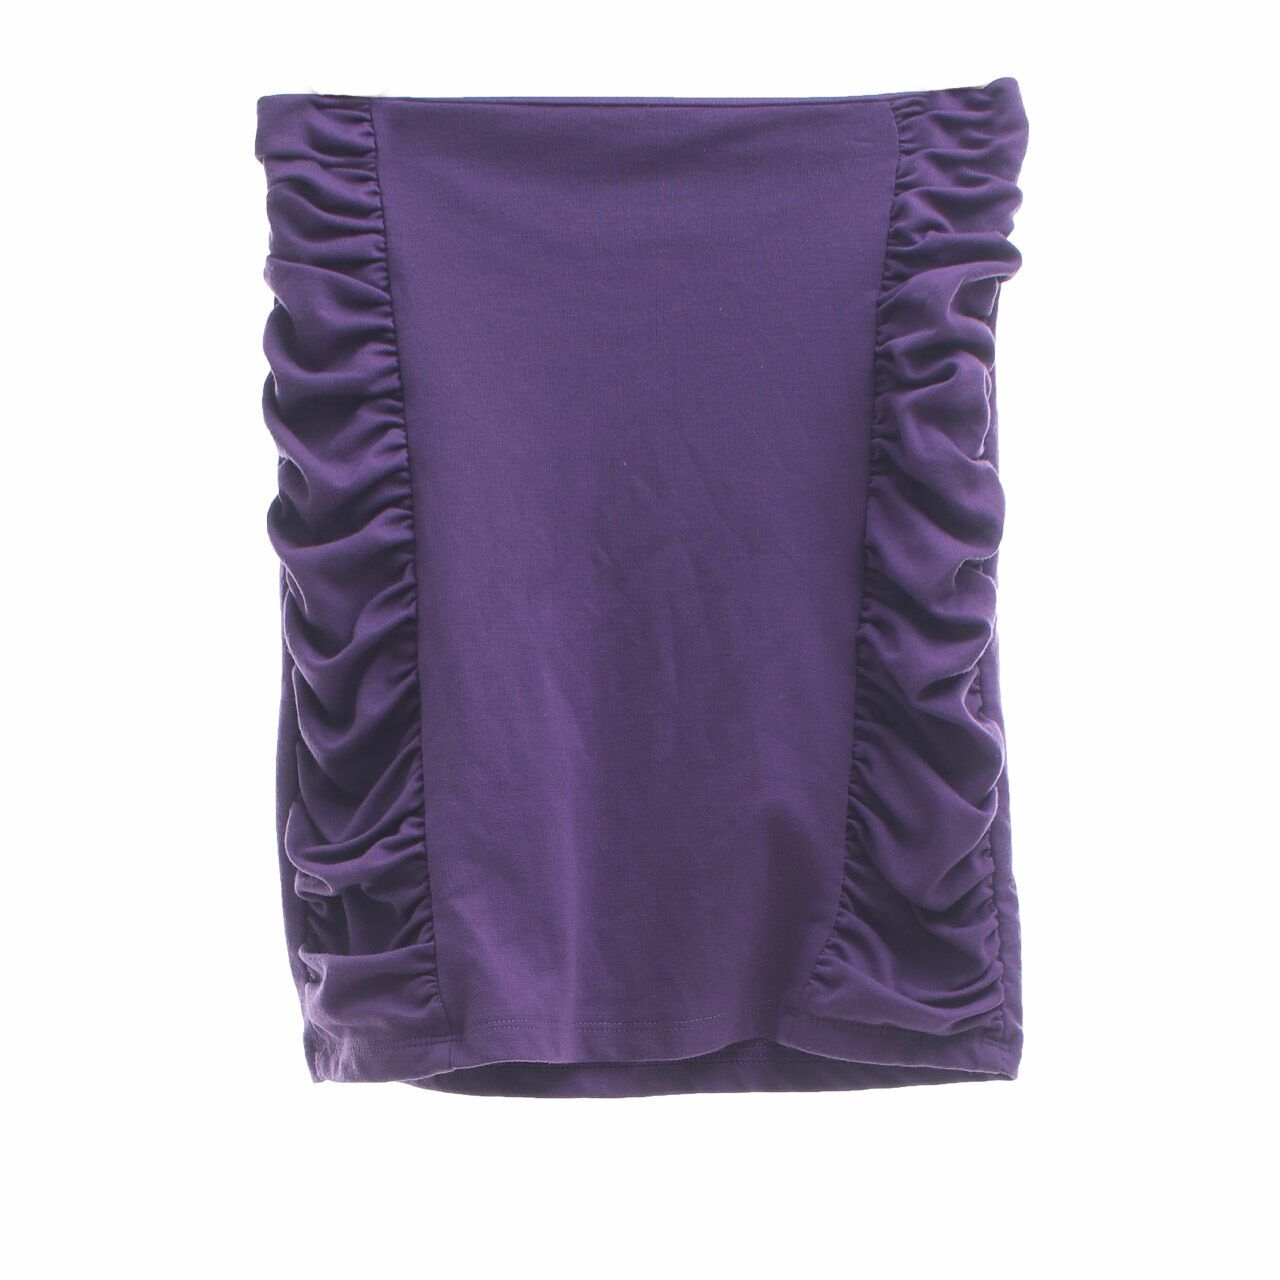 J.REP Purple Mini Skirt